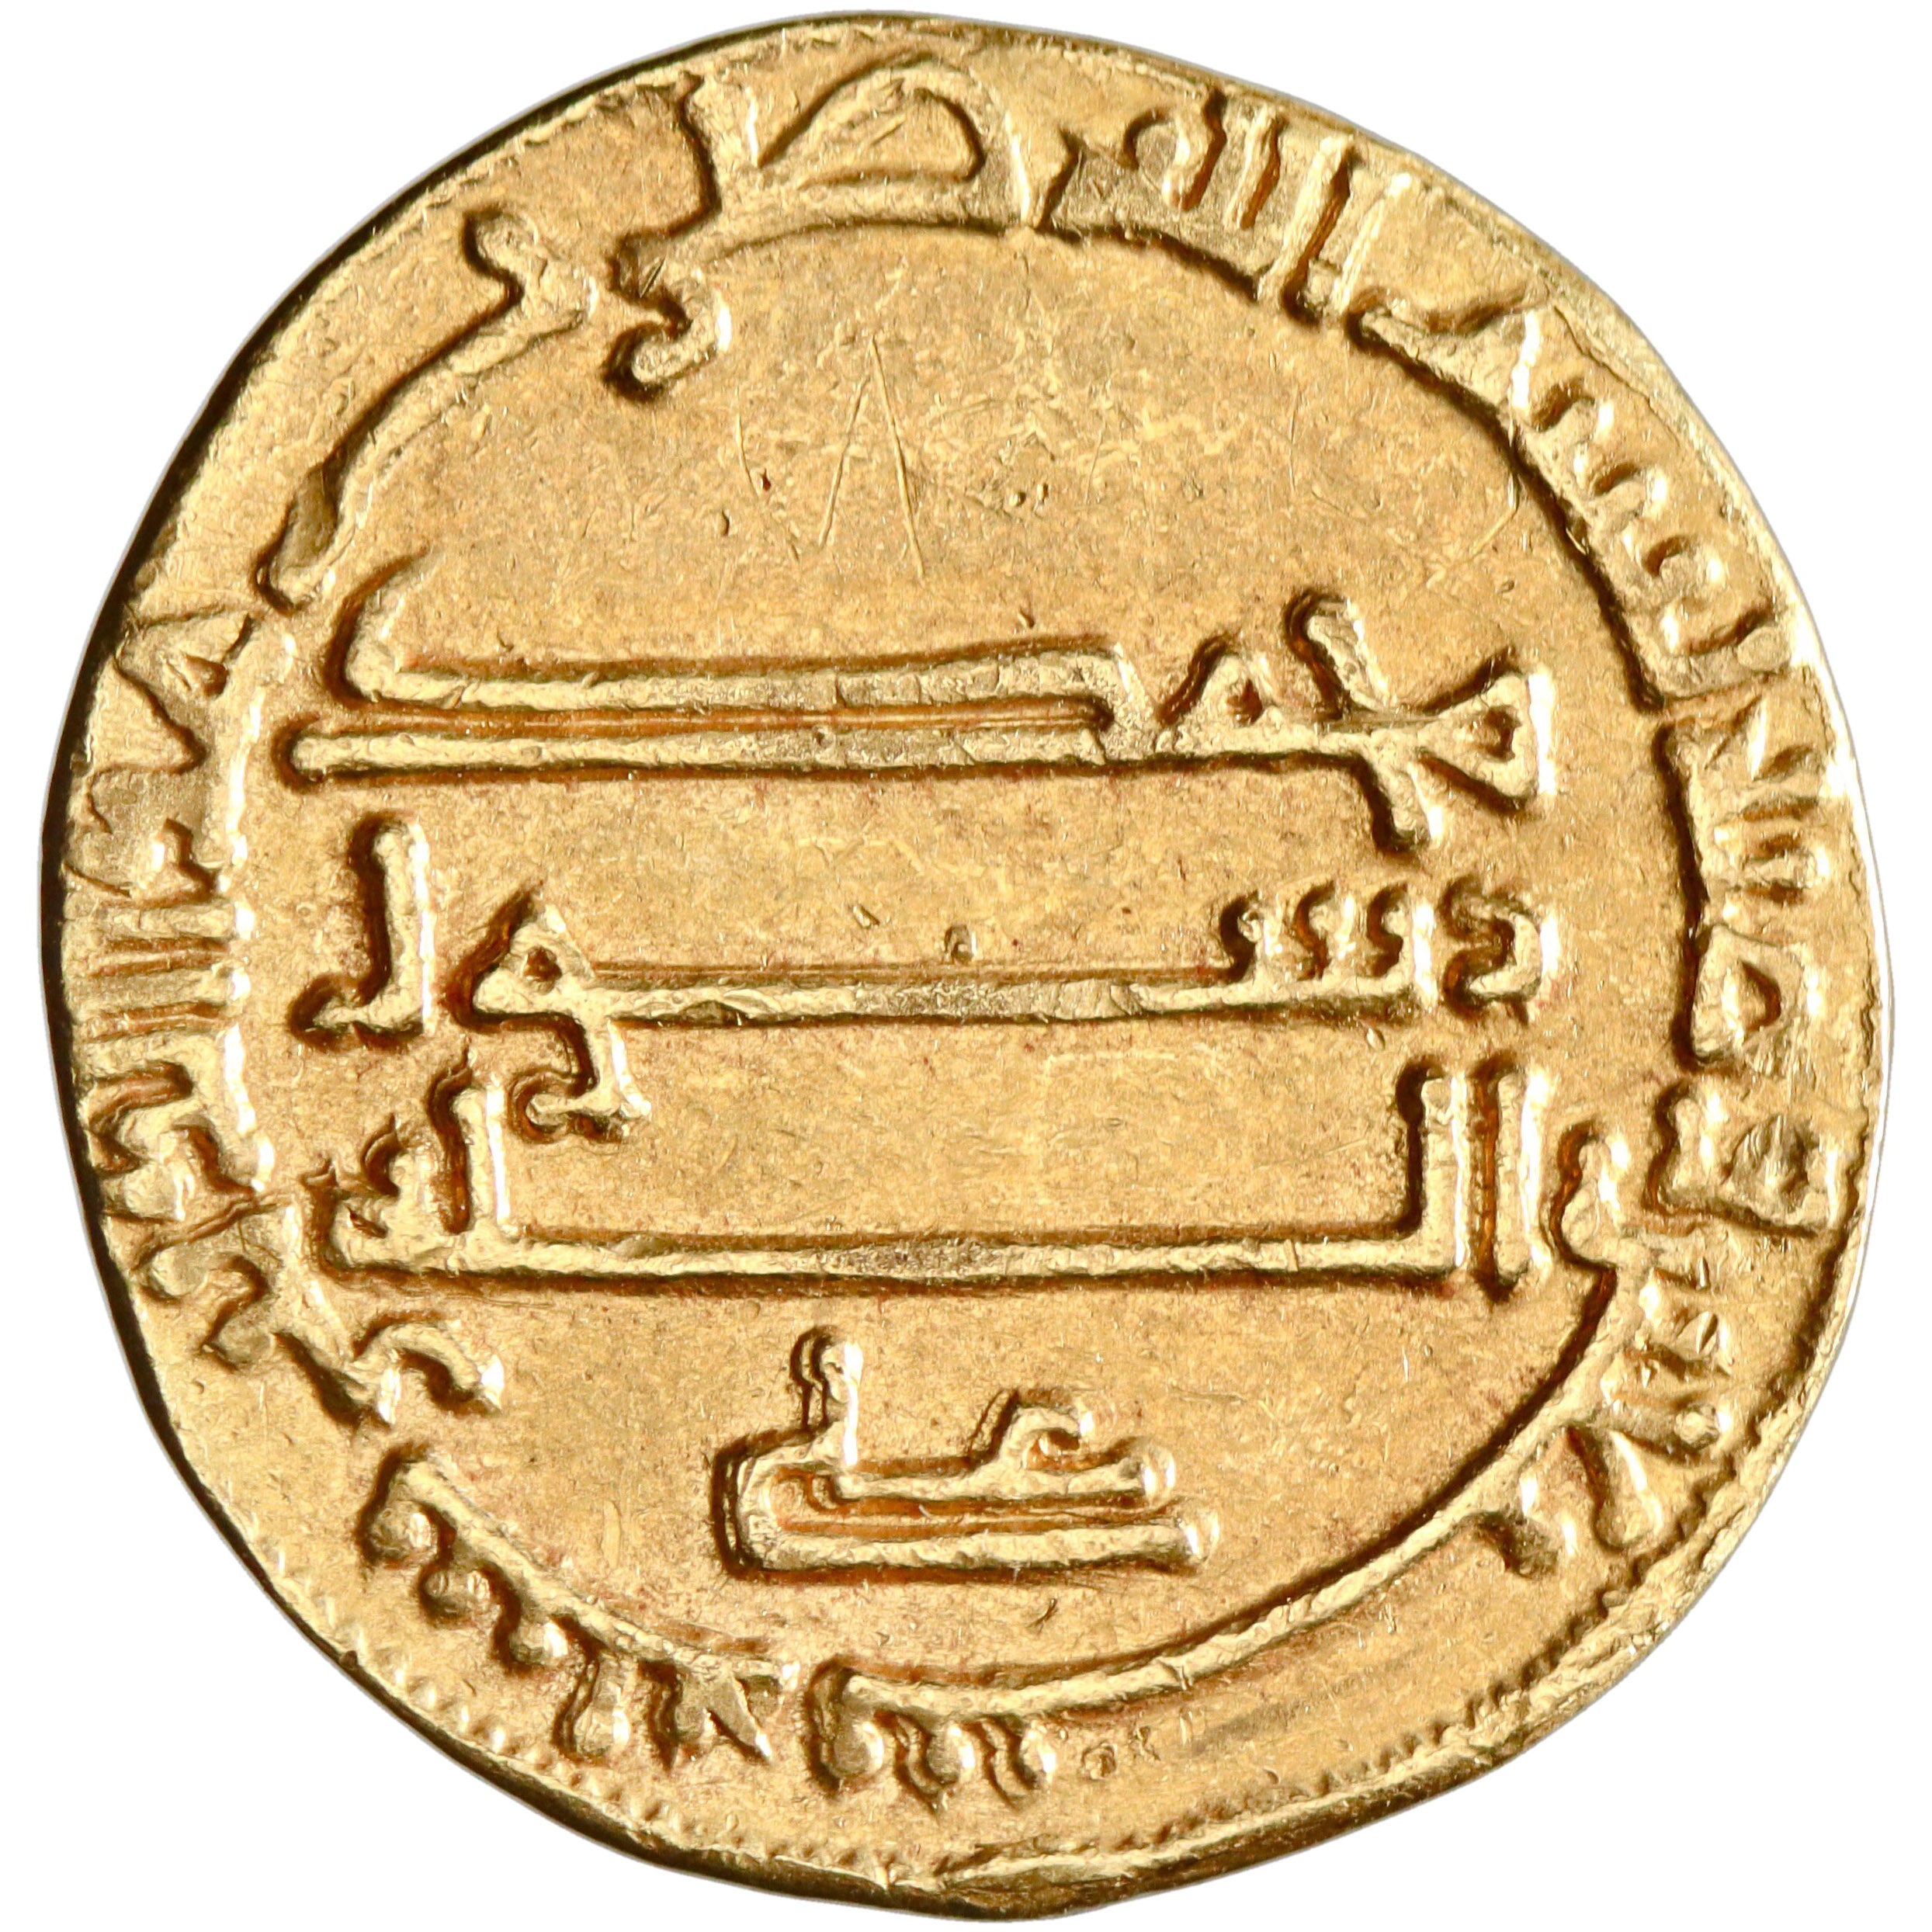 Abbasid, Harun al-Rashid, gold dinar, AH 170, citing 'Ali